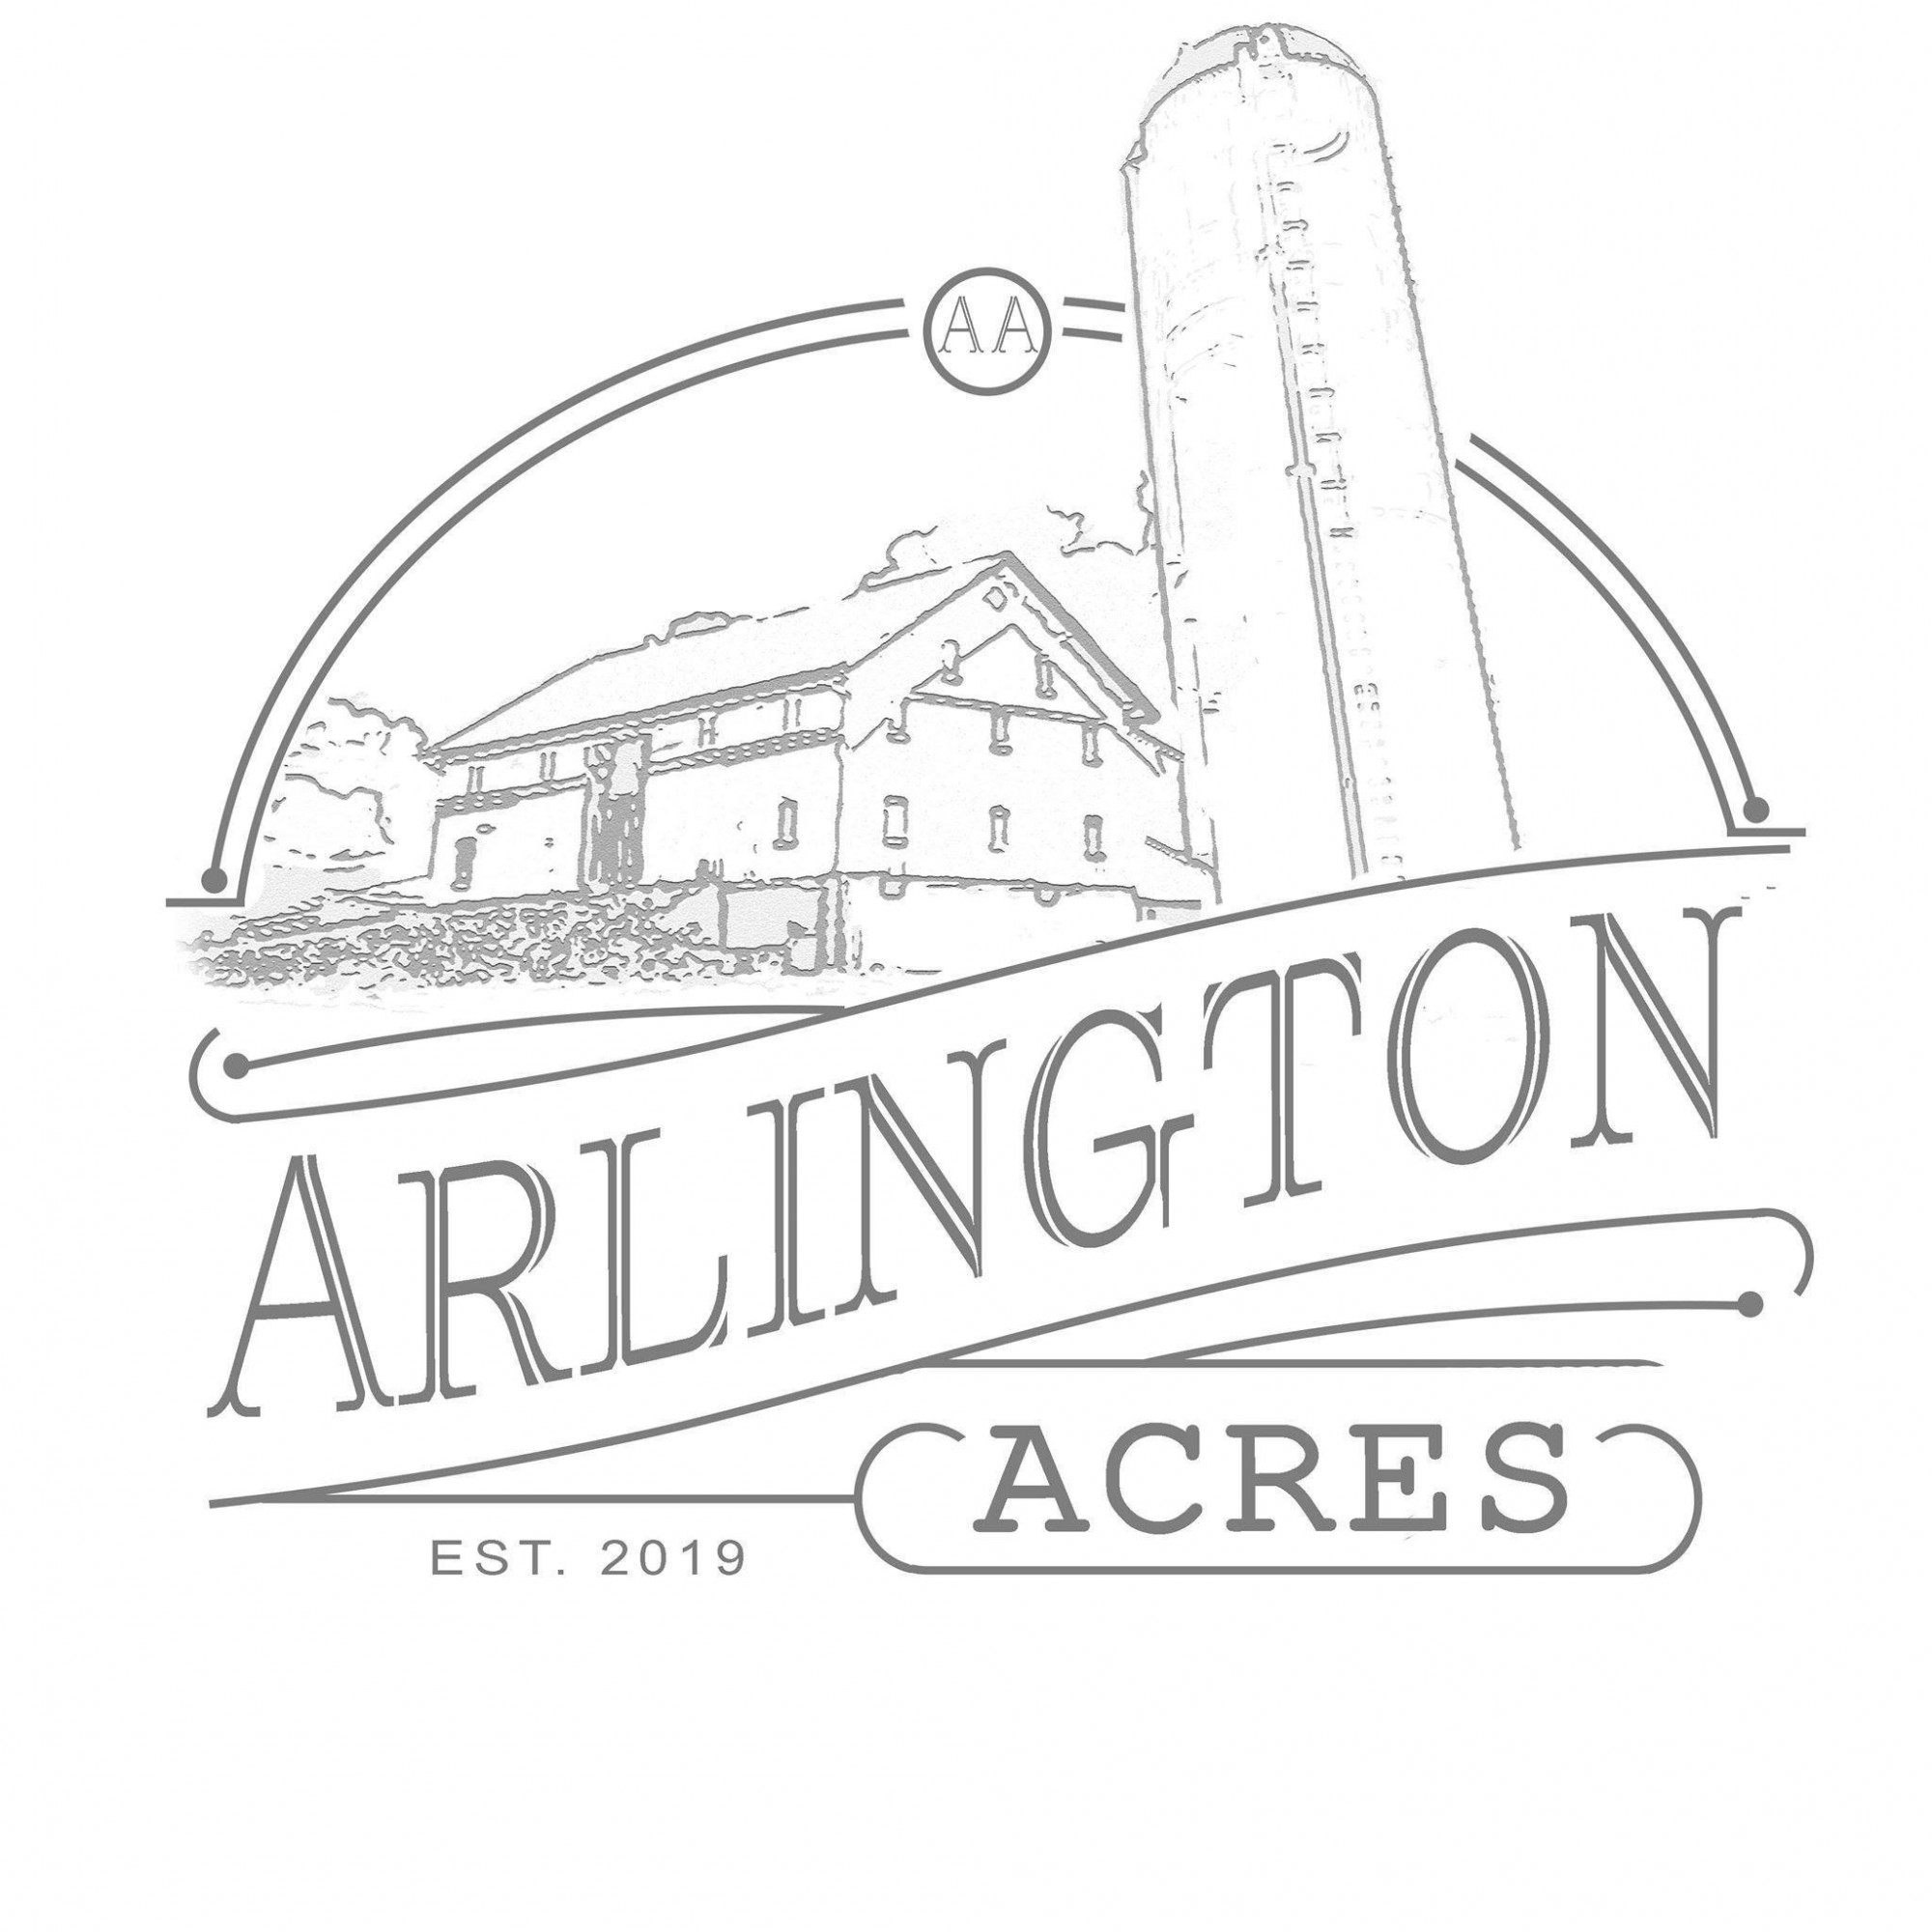 Arlington Acres